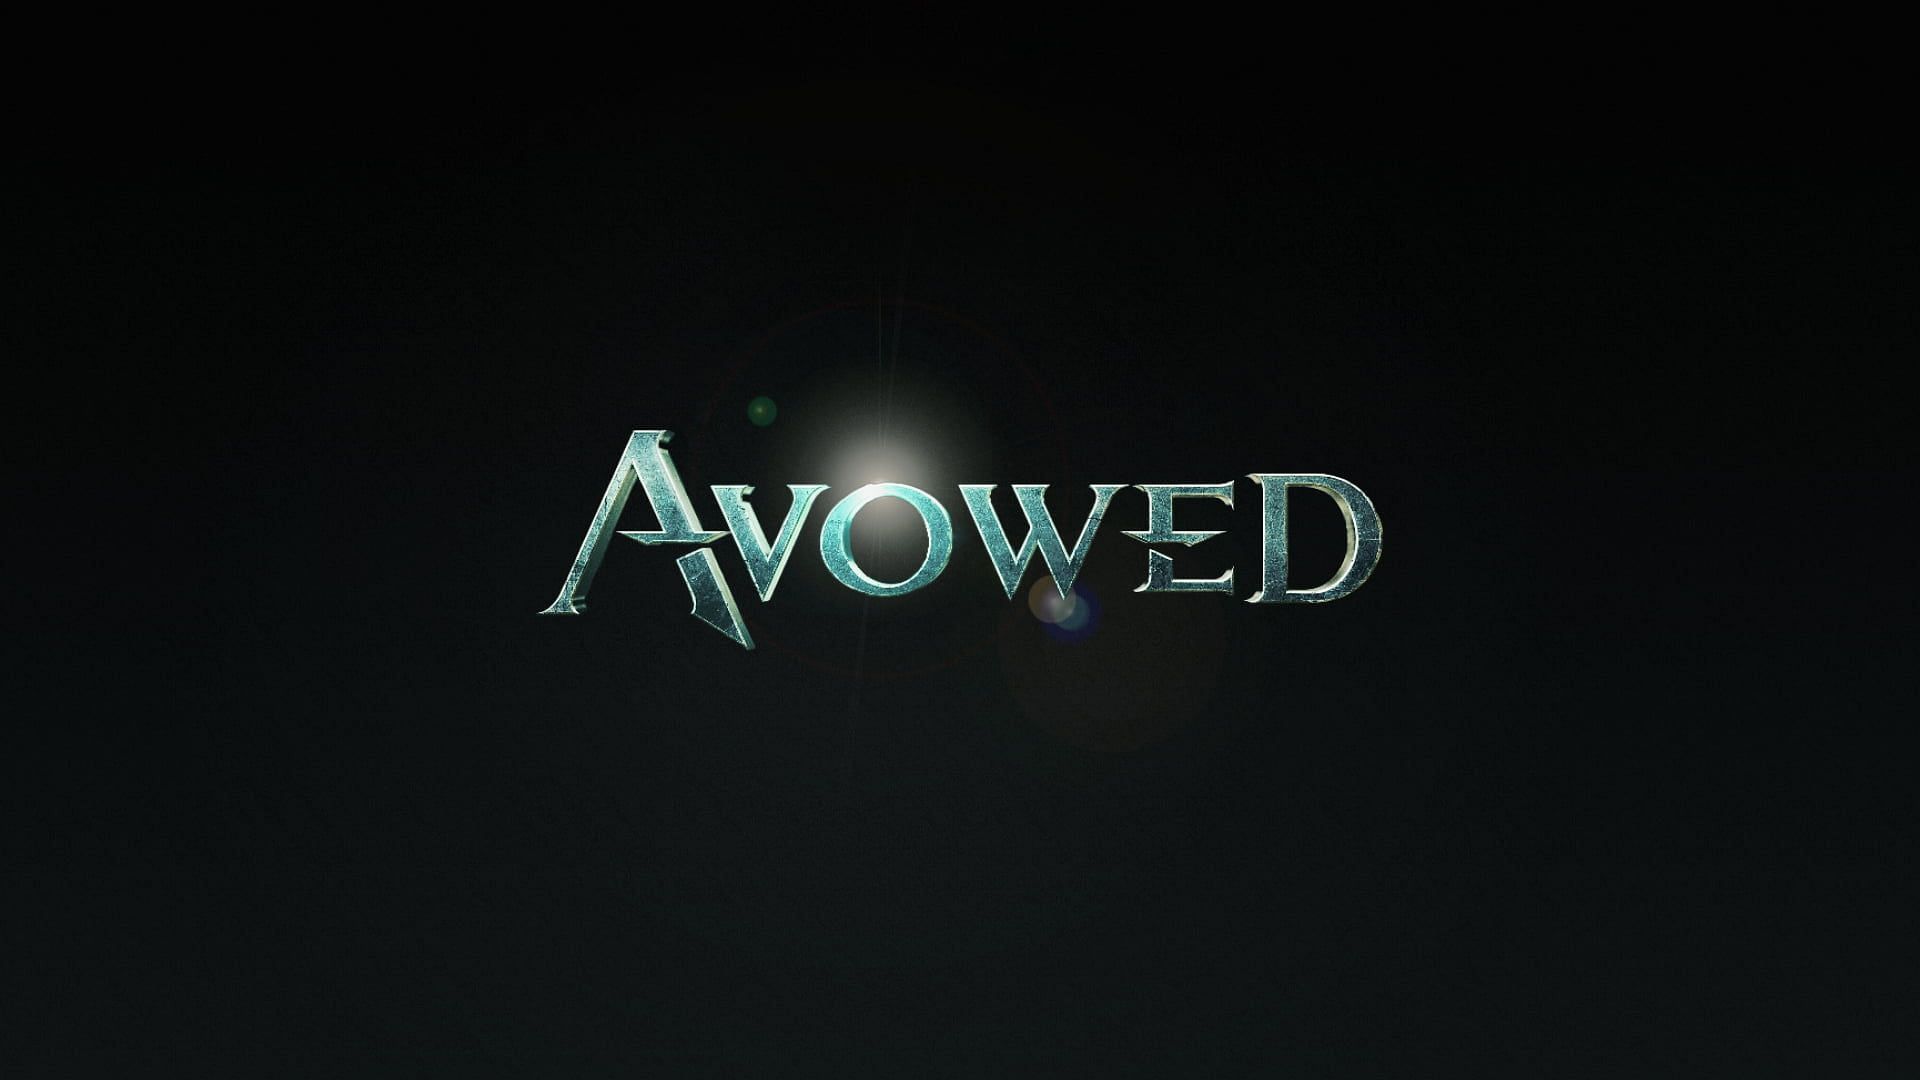 Avowed (image via Xbox Game Studios)